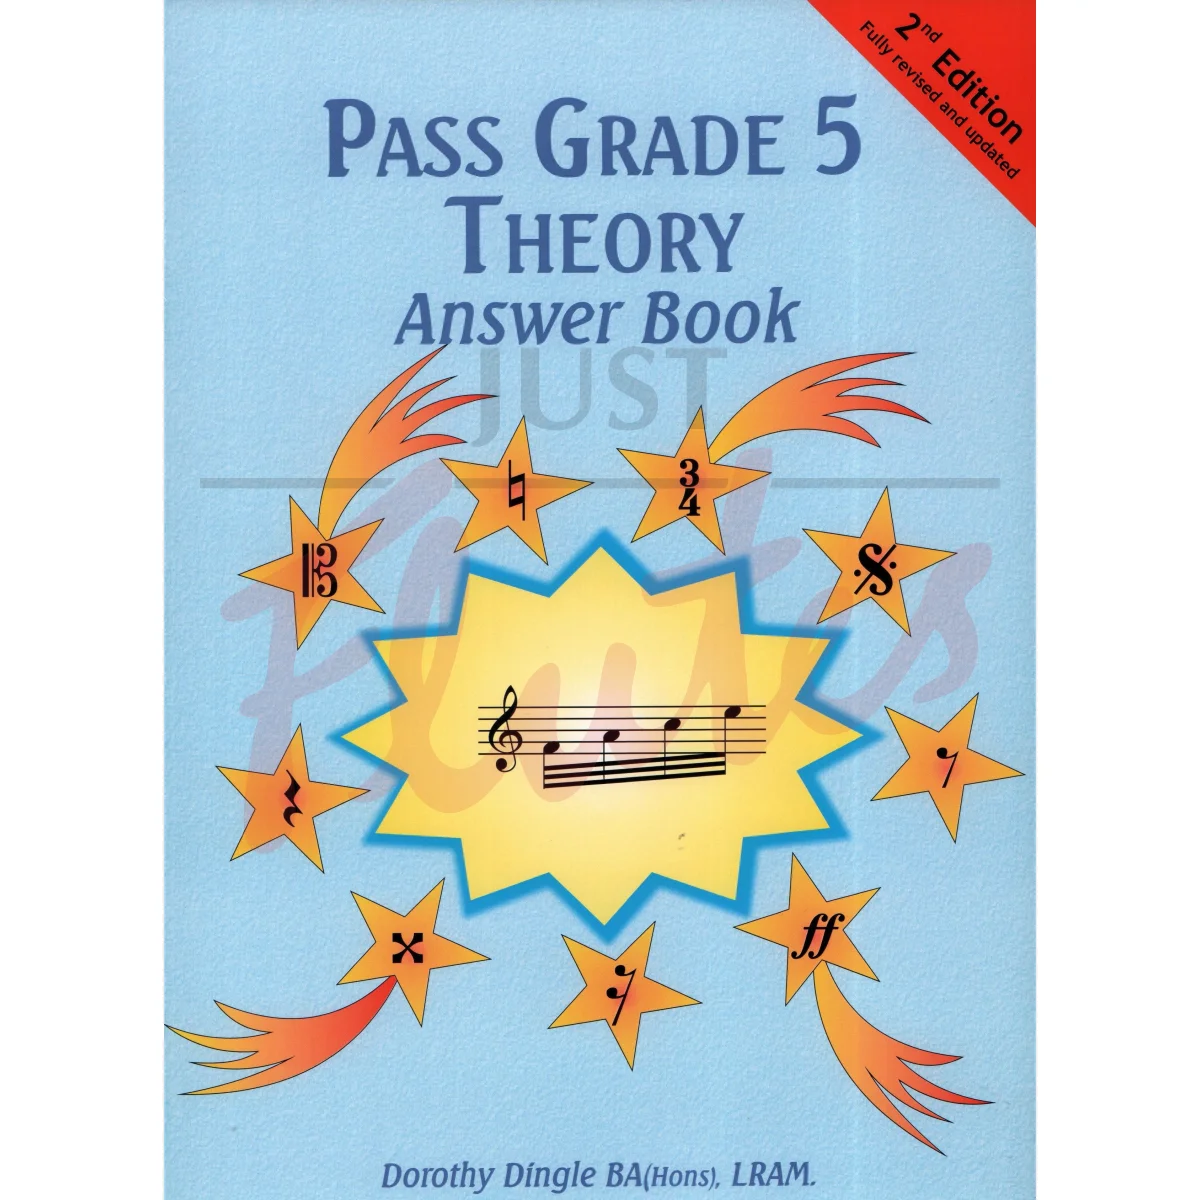 Pass Grade 5 Theory - Answer Book [2nd Edition]